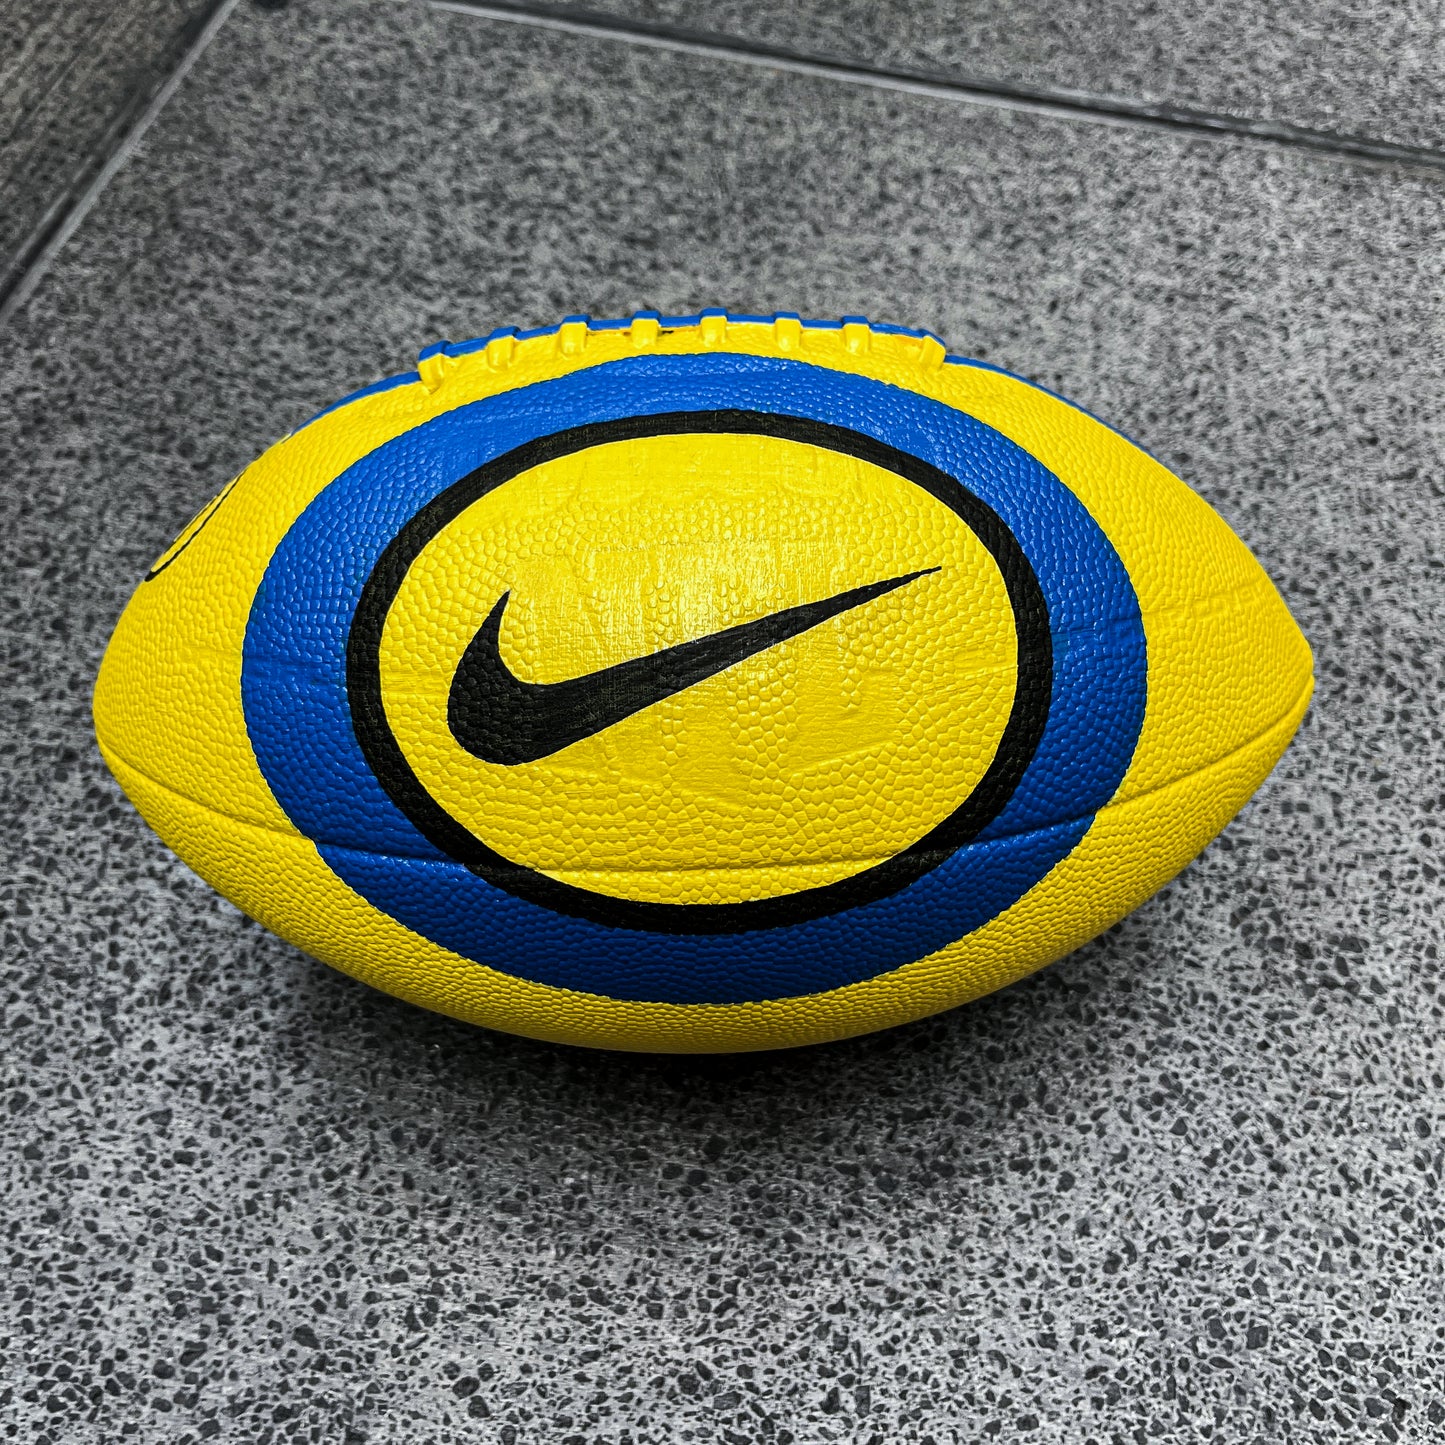 Hand-painted Nike Total90 Aerow Football Football